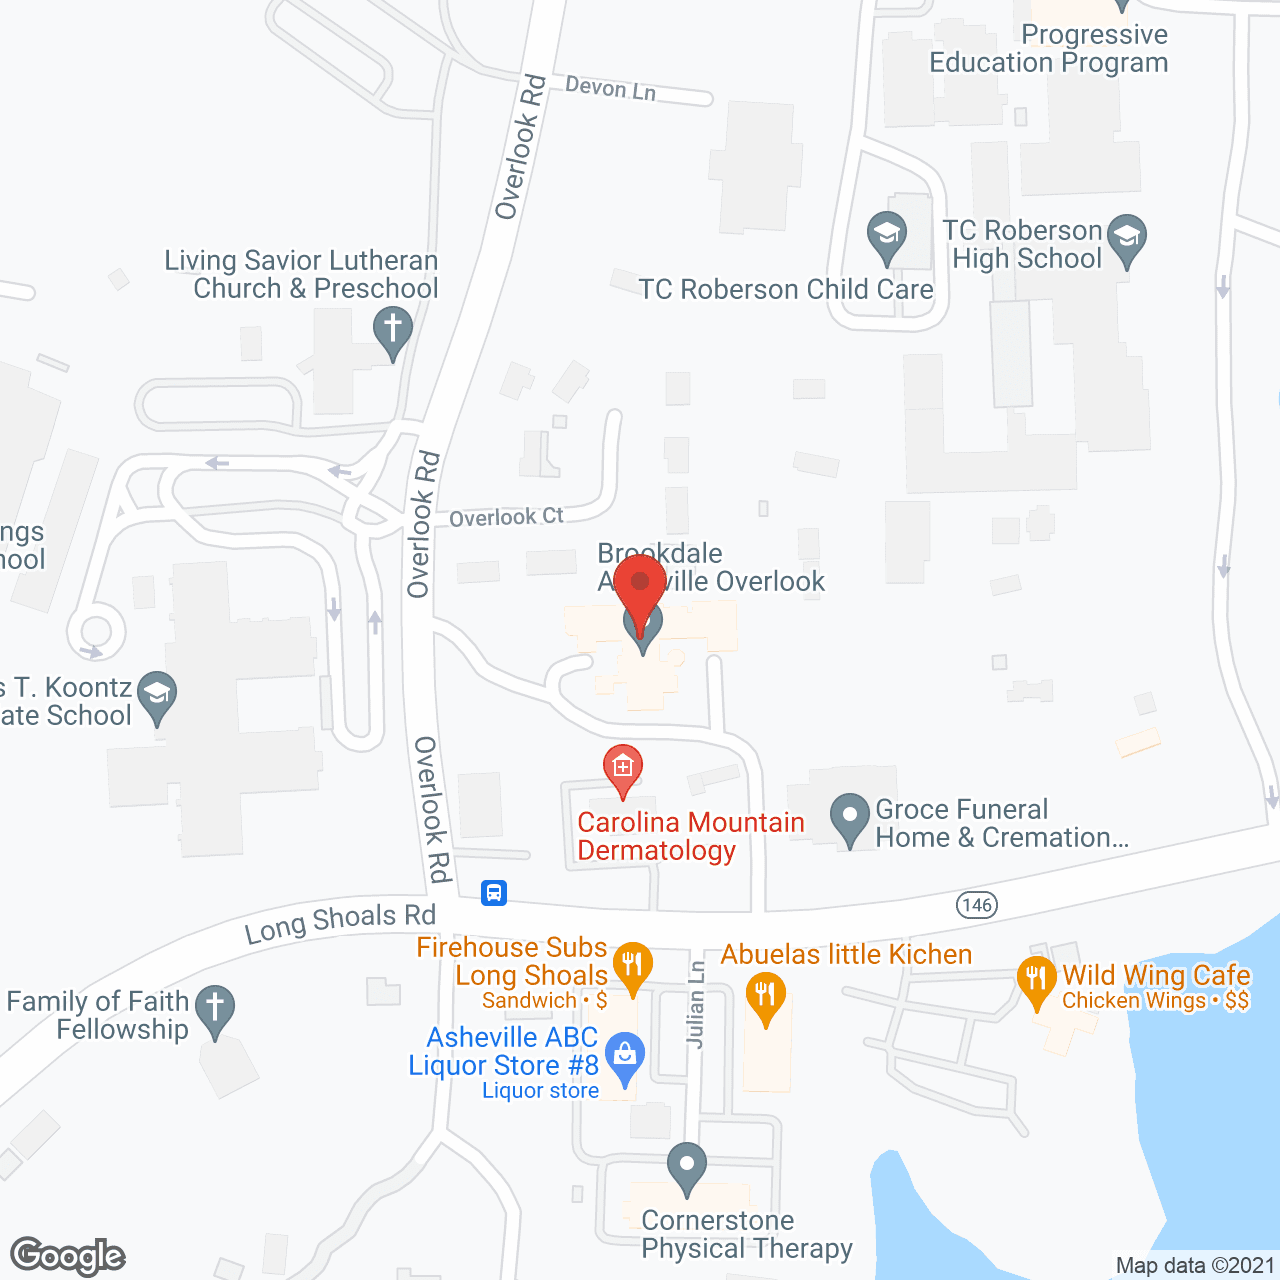 Brookdale Asheville Overlook in google map